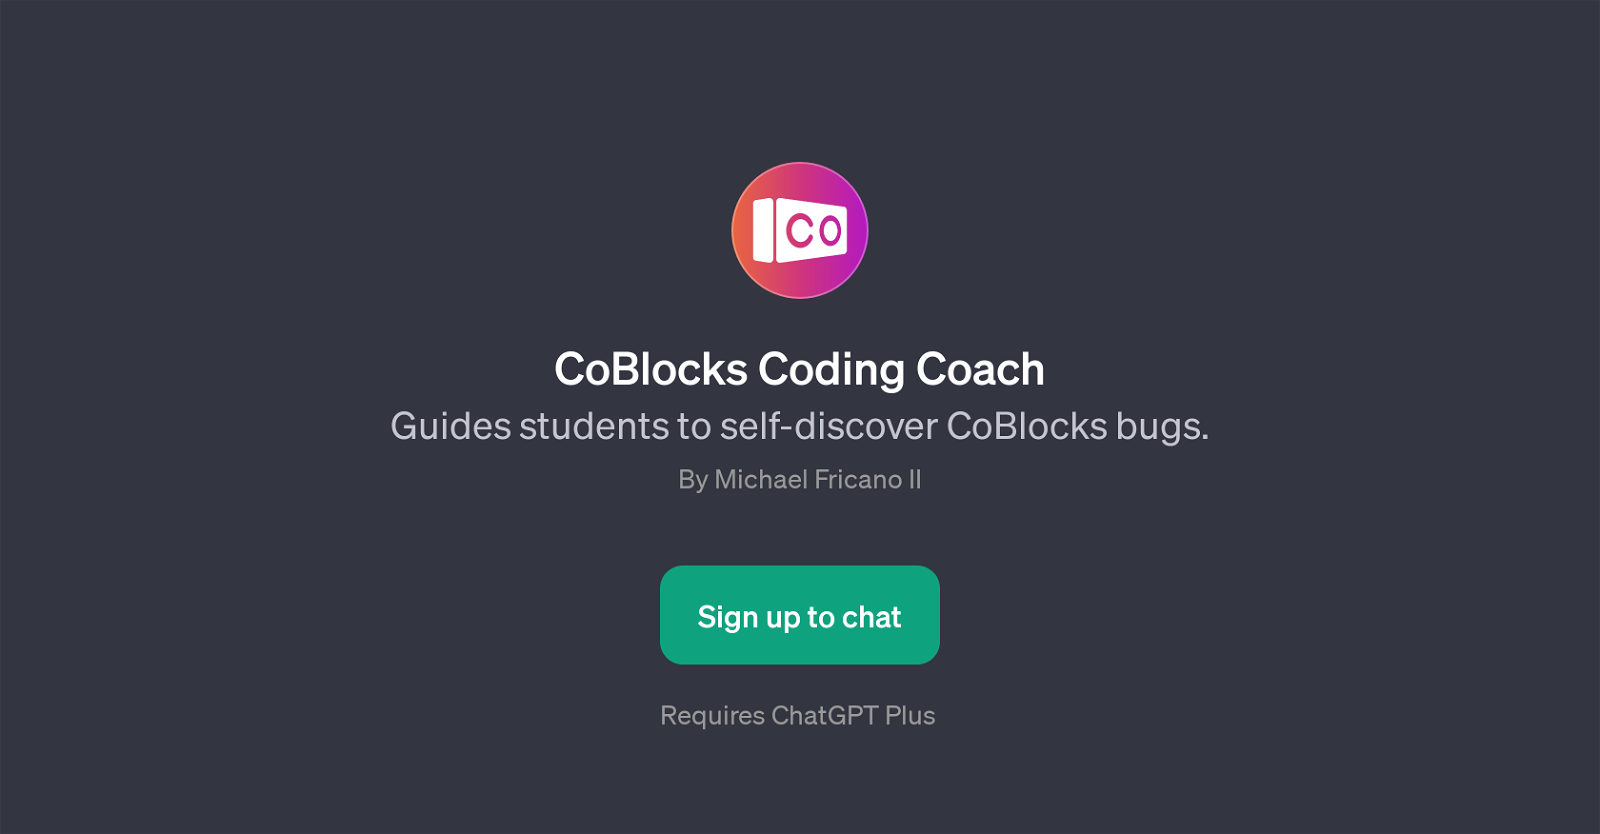 CoBlocks Coding Coach website